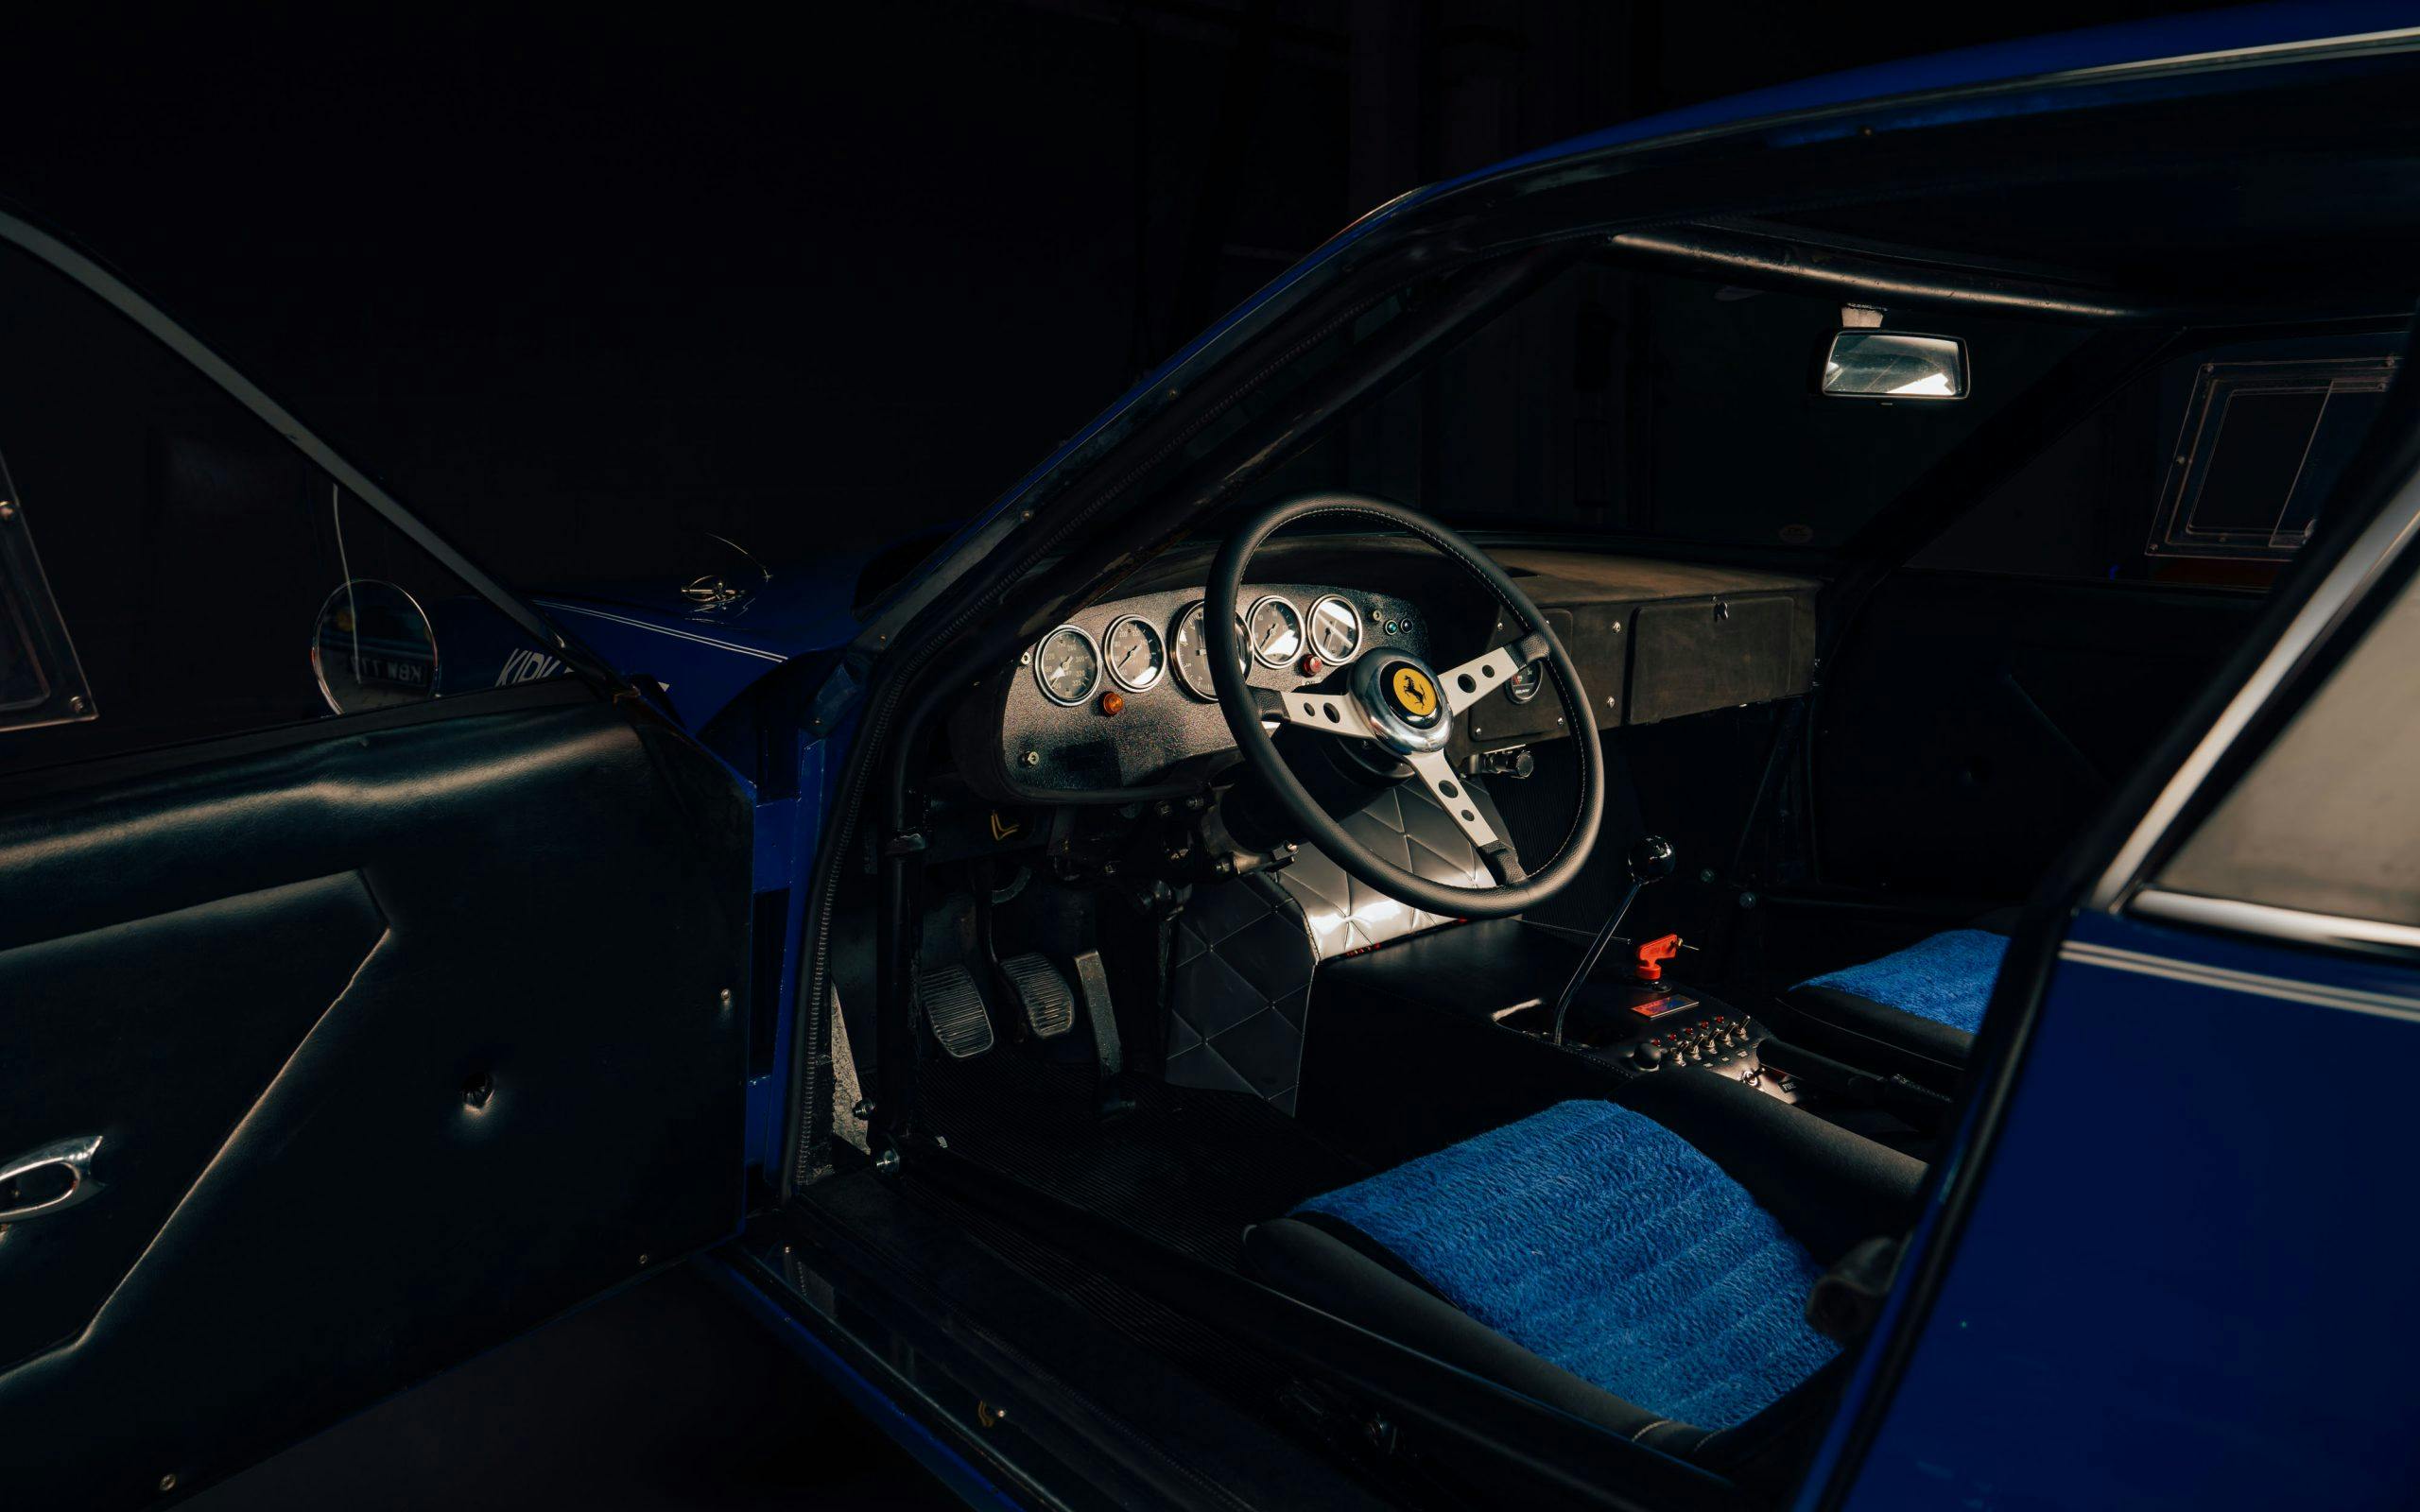 Ferrari 365 GTB:4 Daytona interior cockpit